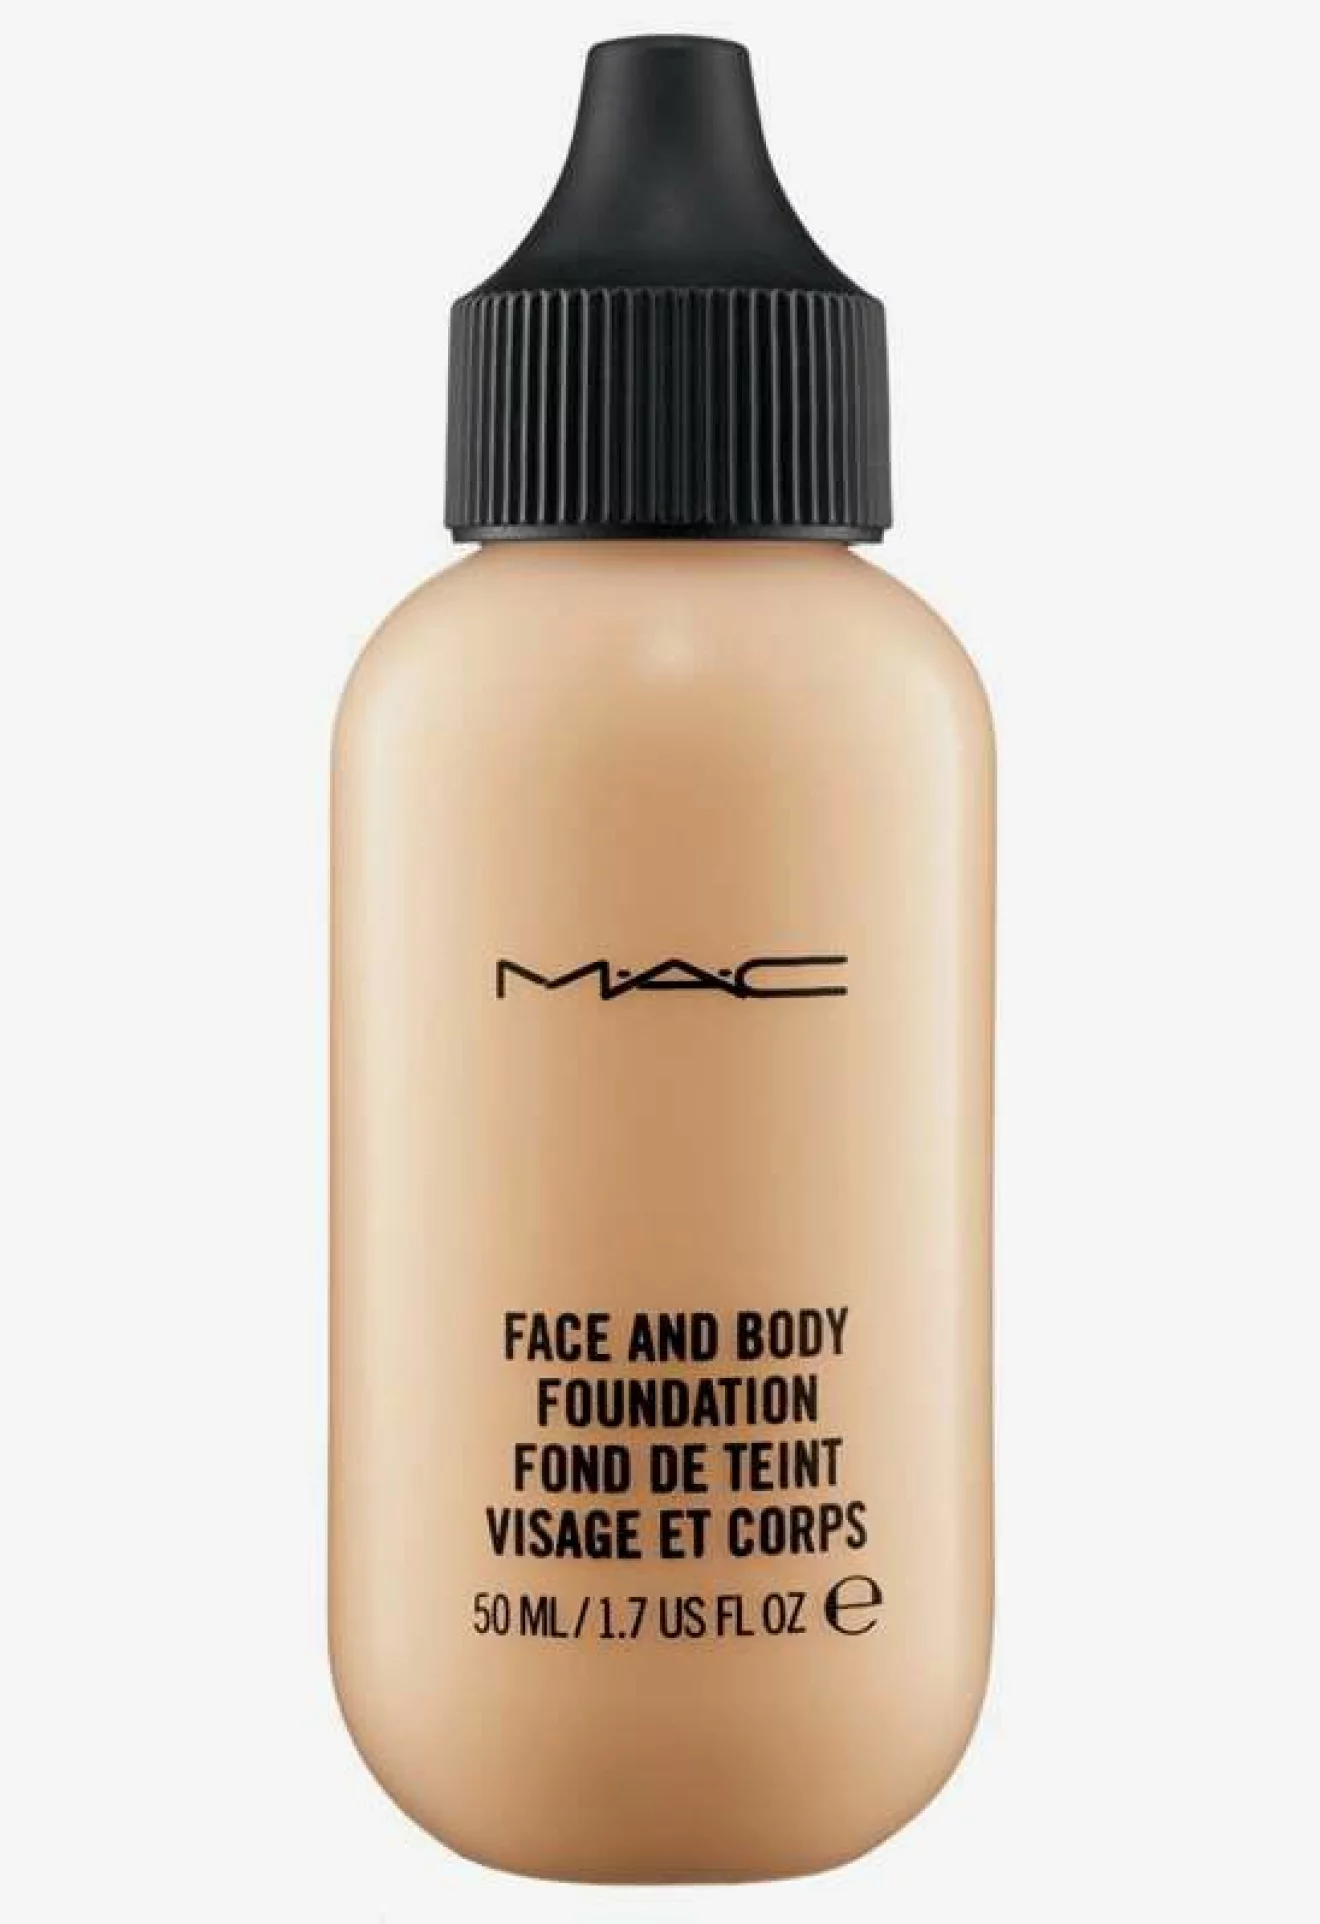 Face and Body foundation från MAC.